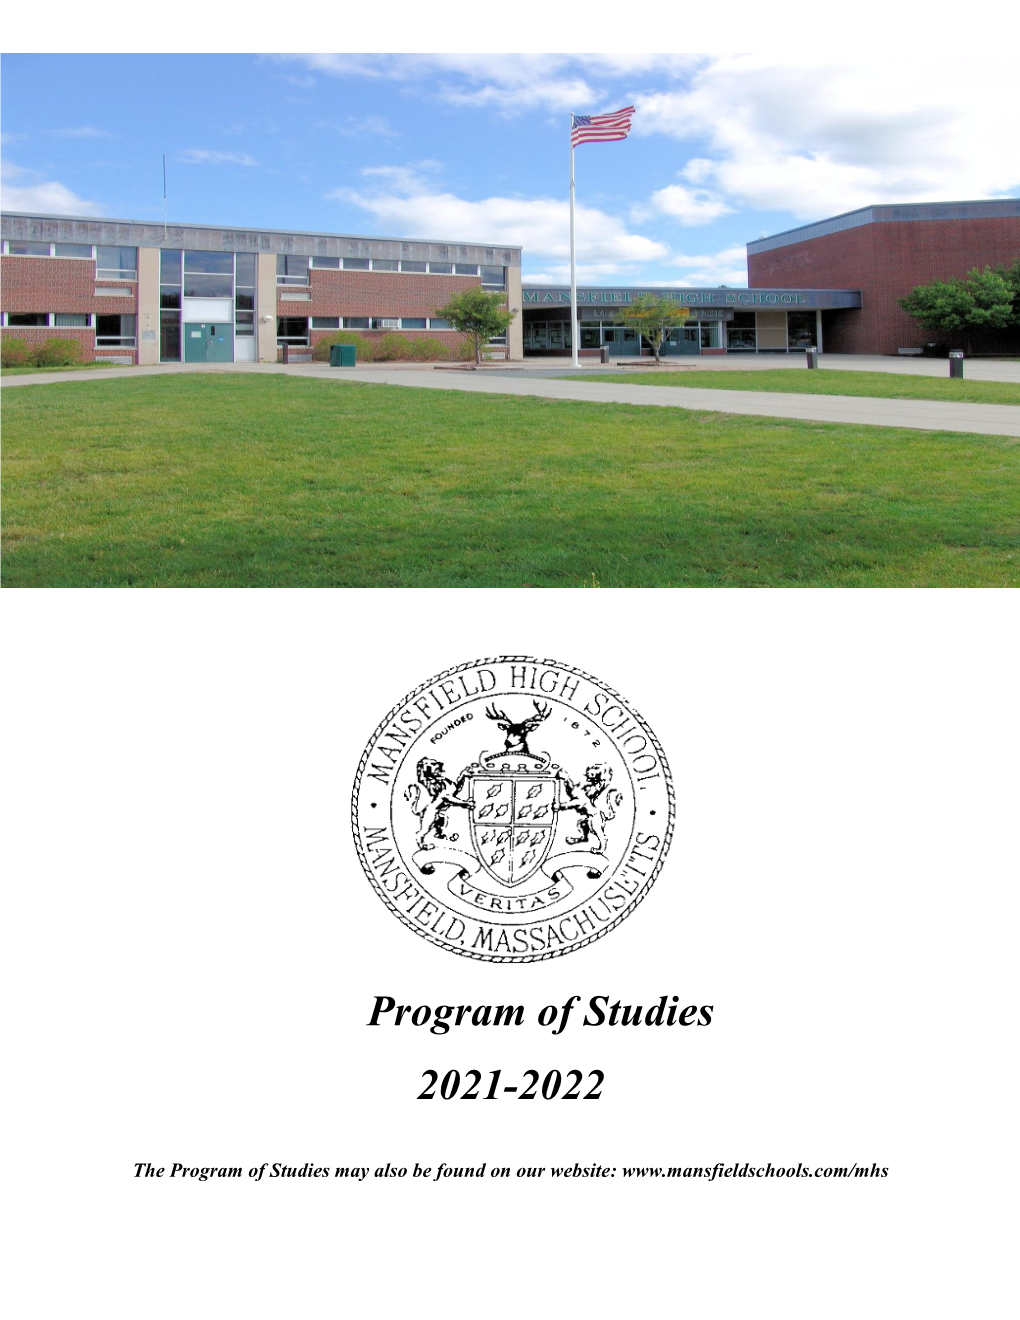 Program of Studies 2021-2022